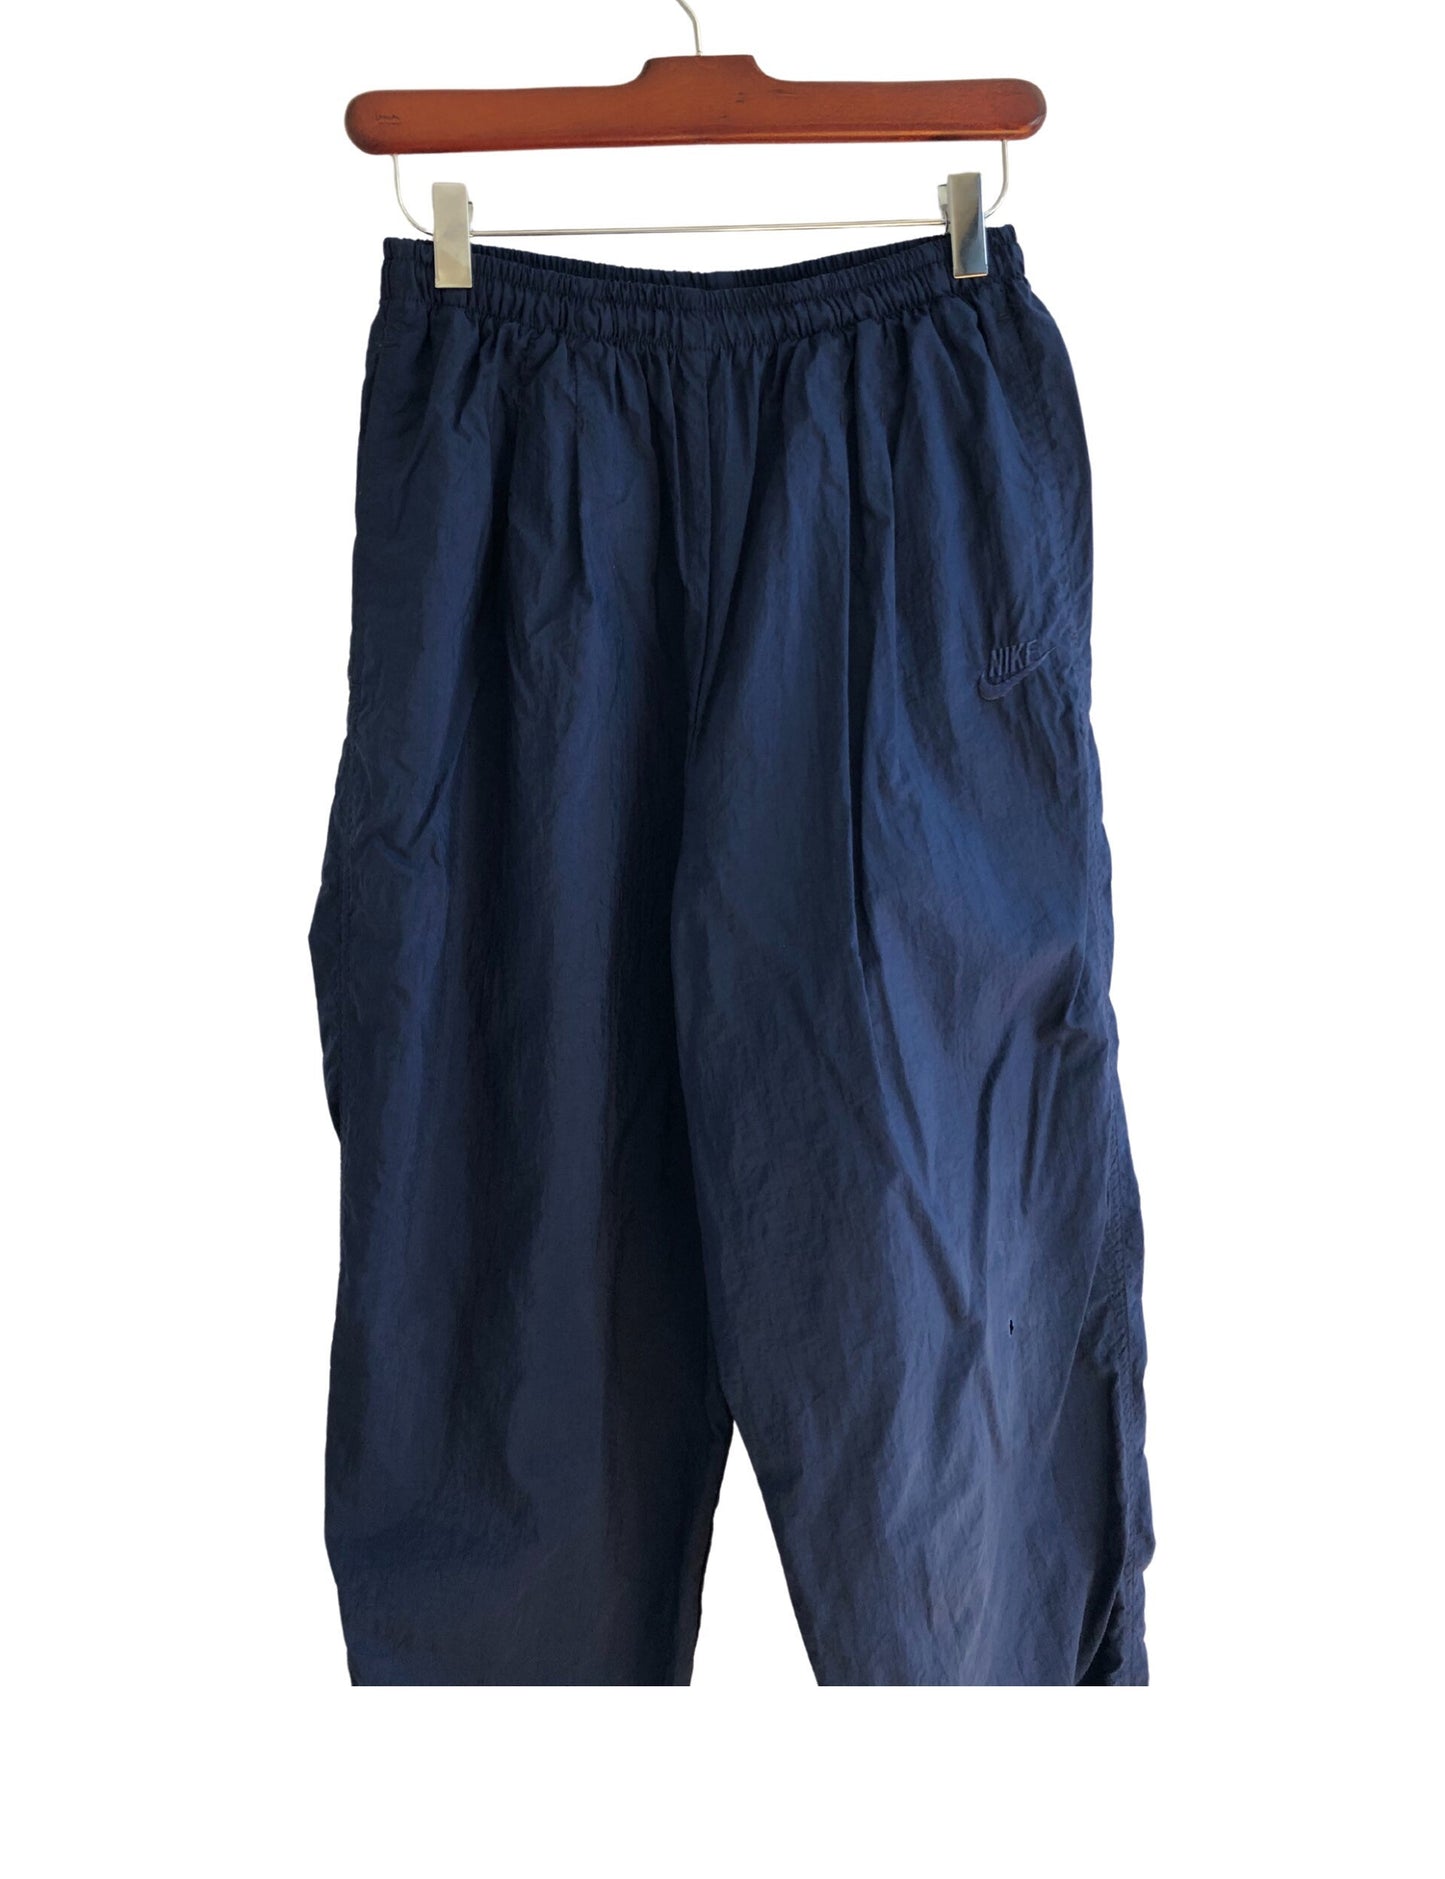 90’s NIKE Swoosh Navy Blue Nylon Athletic Track Ankle Zip Jogger Pants Size Large